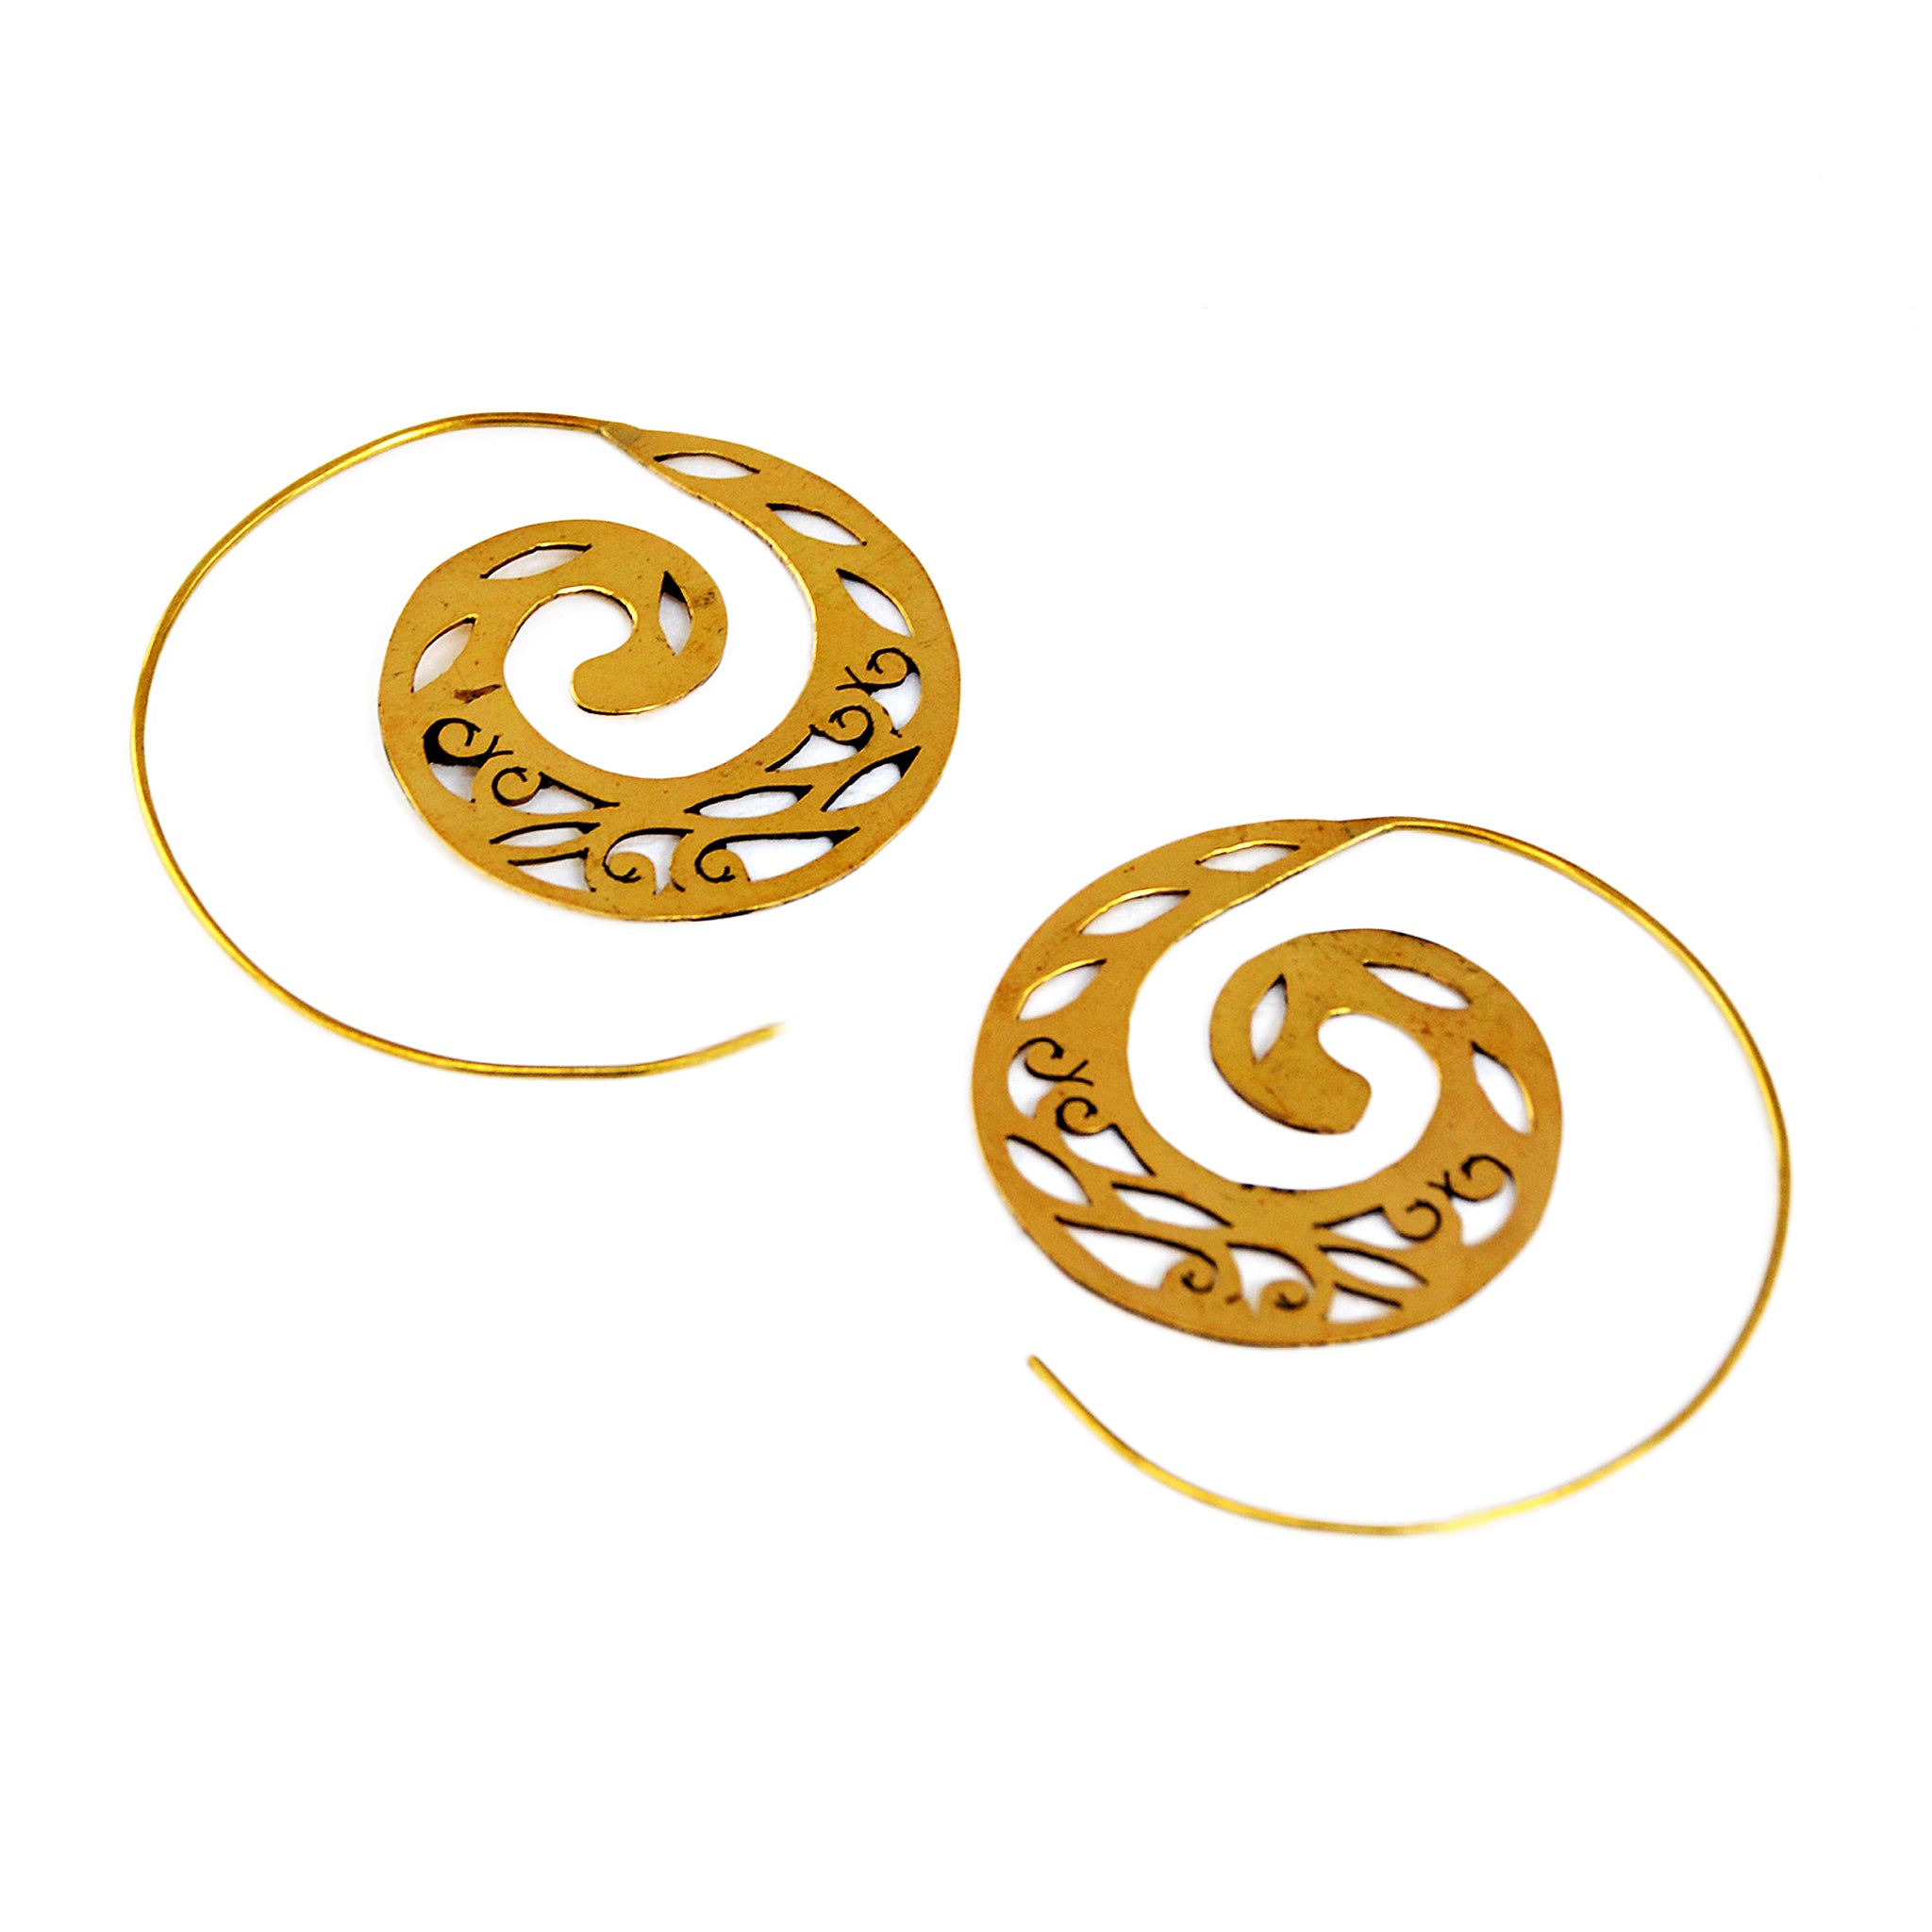 Brass ethnic spiral earrings